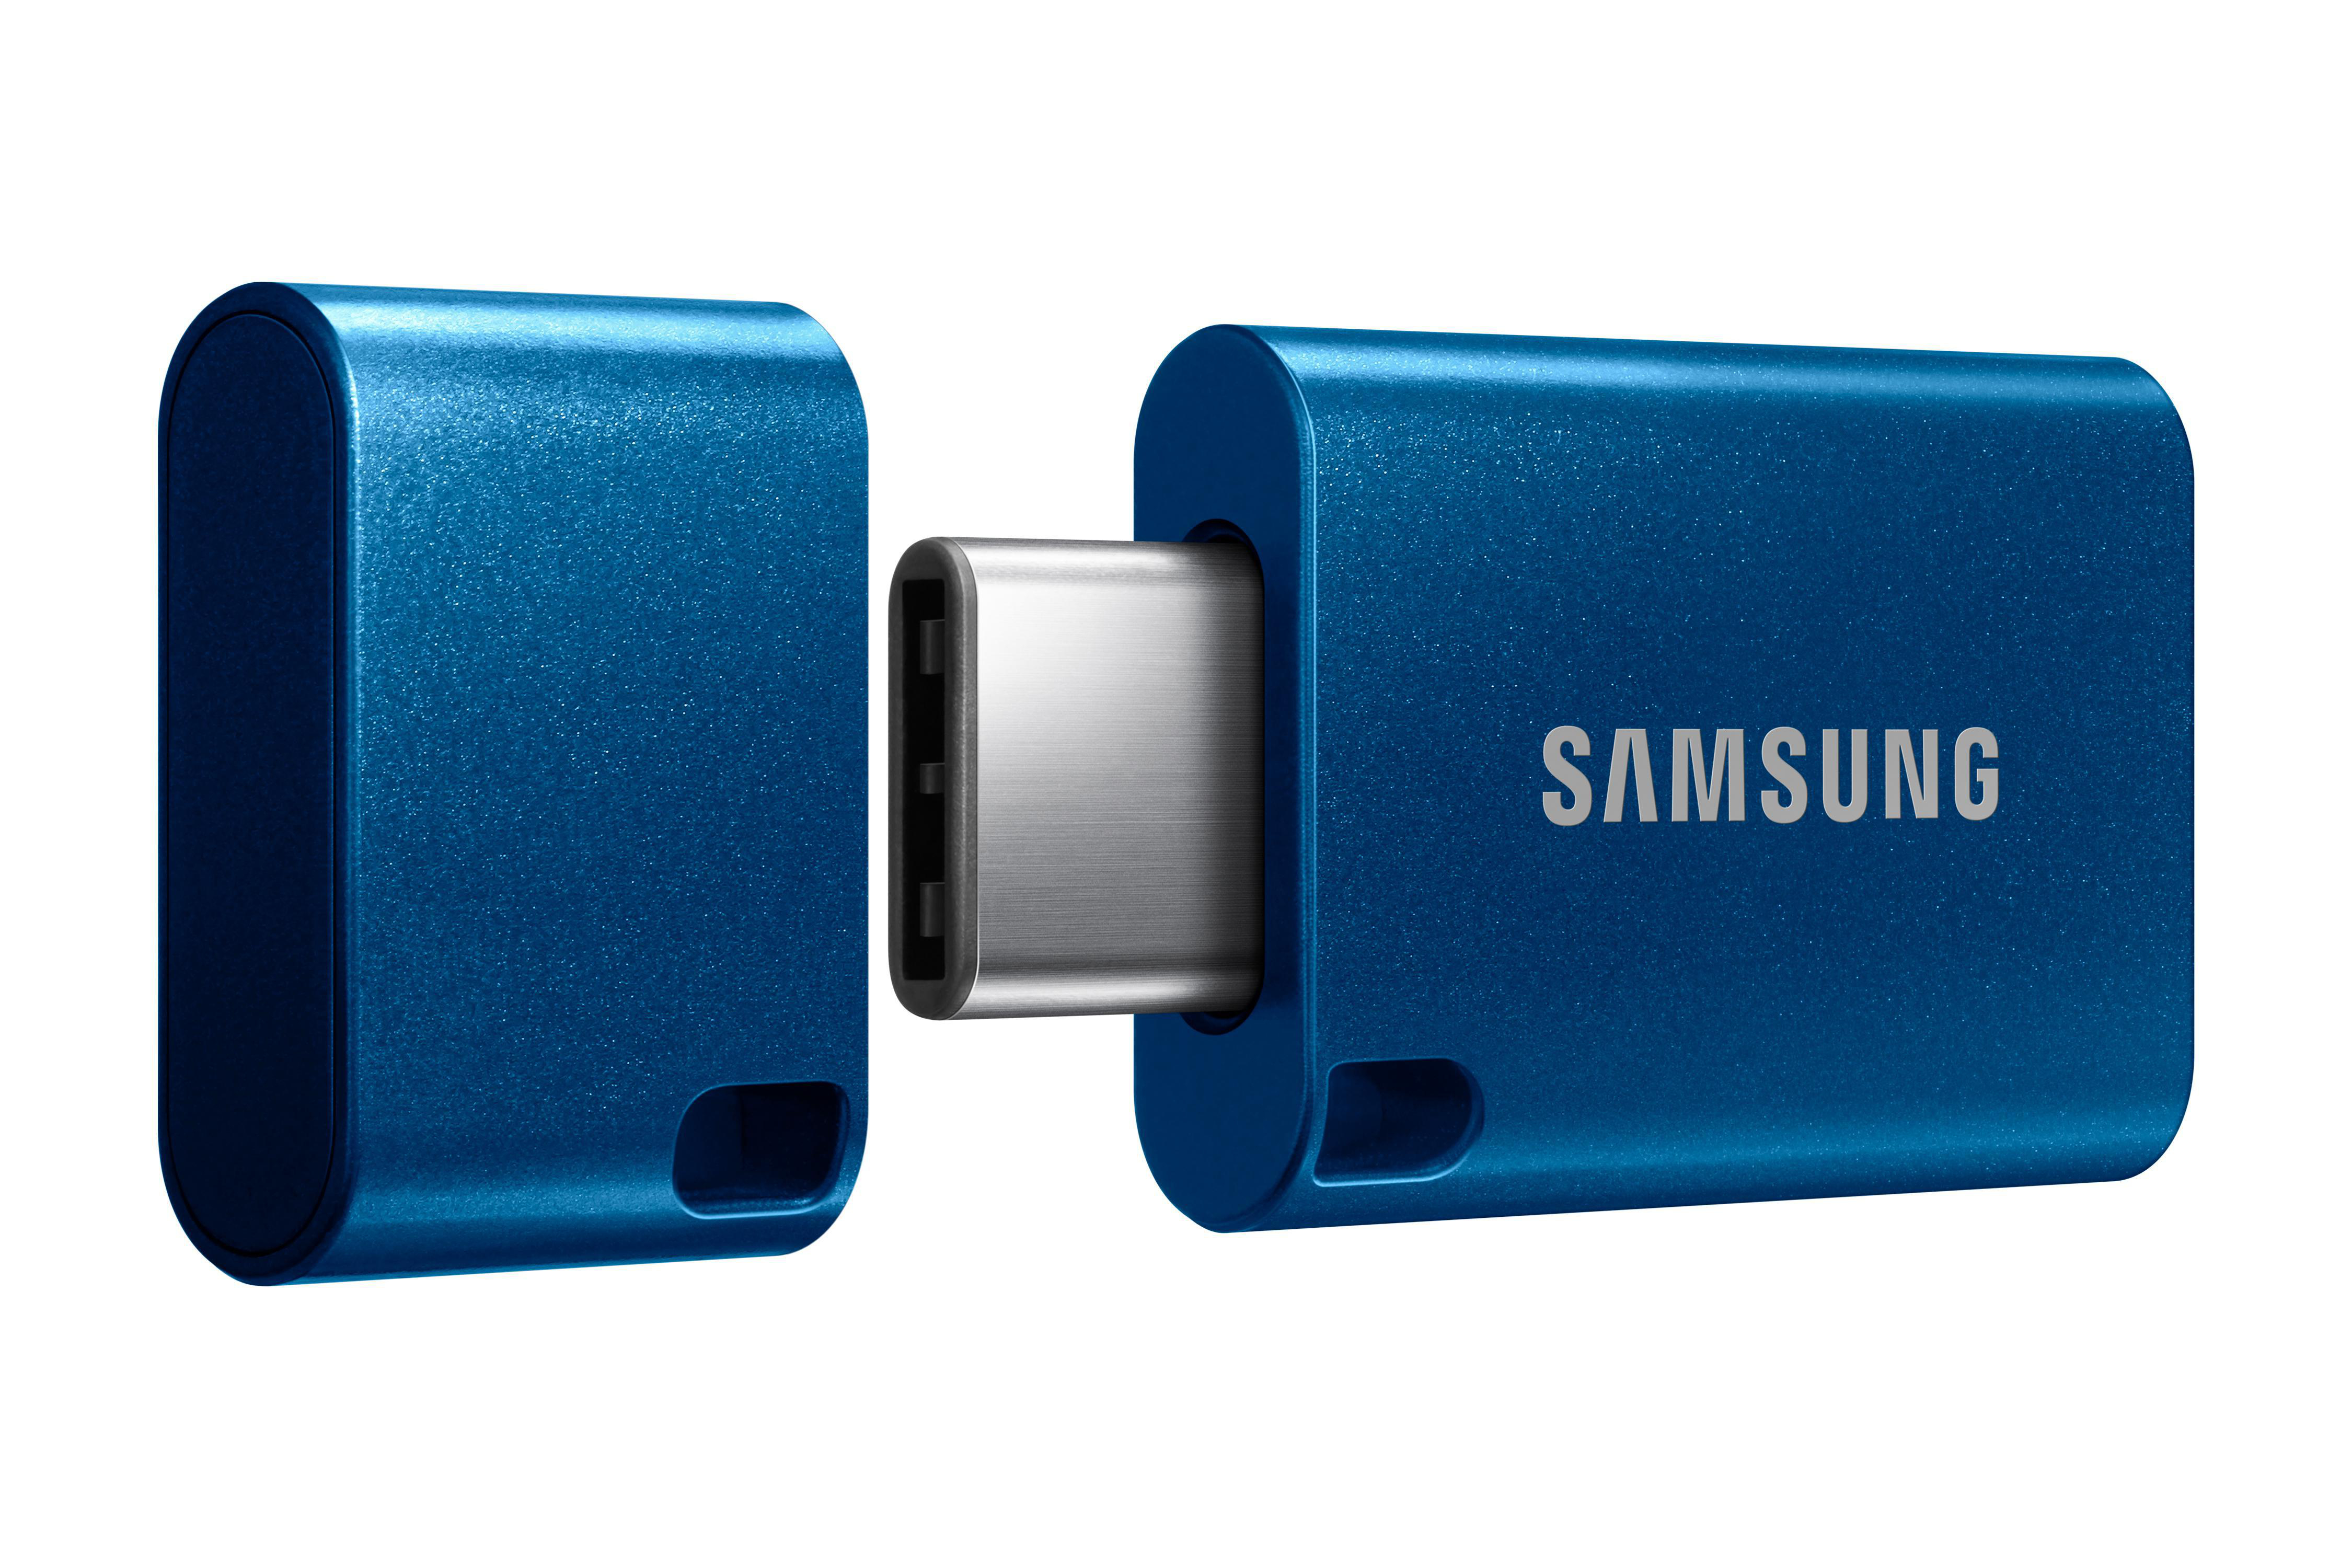 SAMSUNG MUF-128DA/APC USB-Stick, 128 GB, Blau MB/s, 400